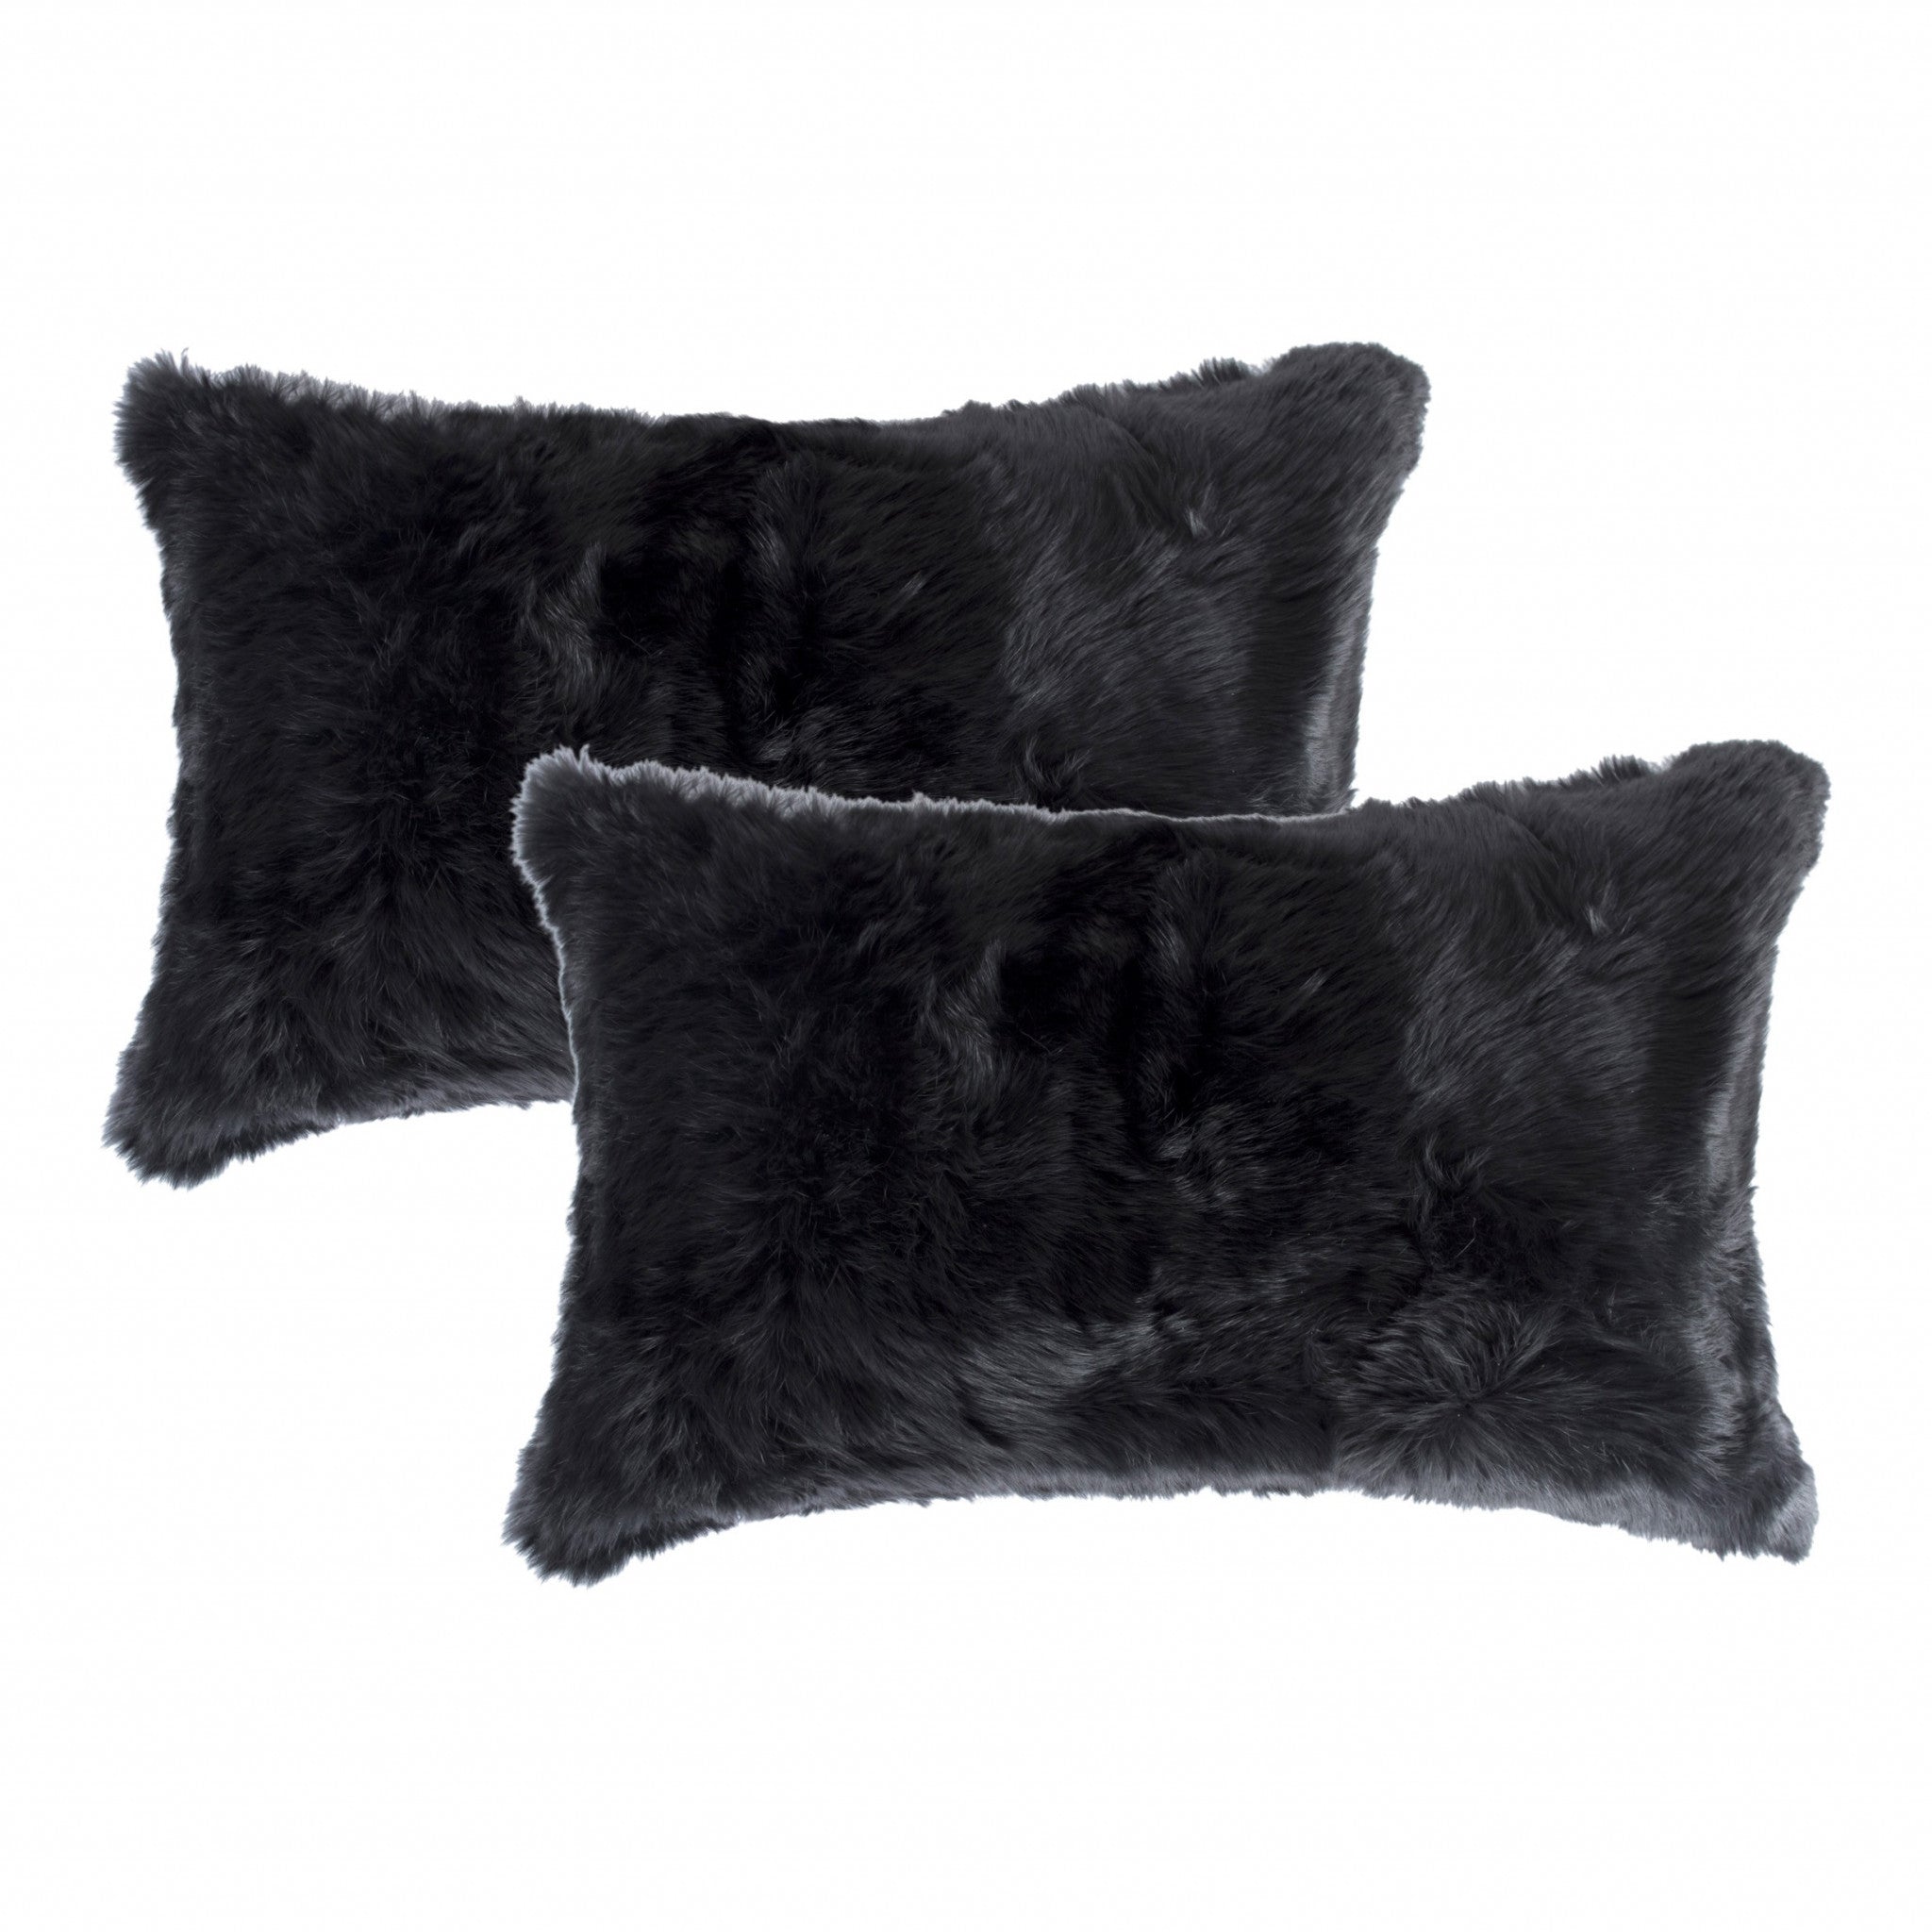 Set Of Two 12" X 20" Black Rabbit Natural Fur Throw Pillows